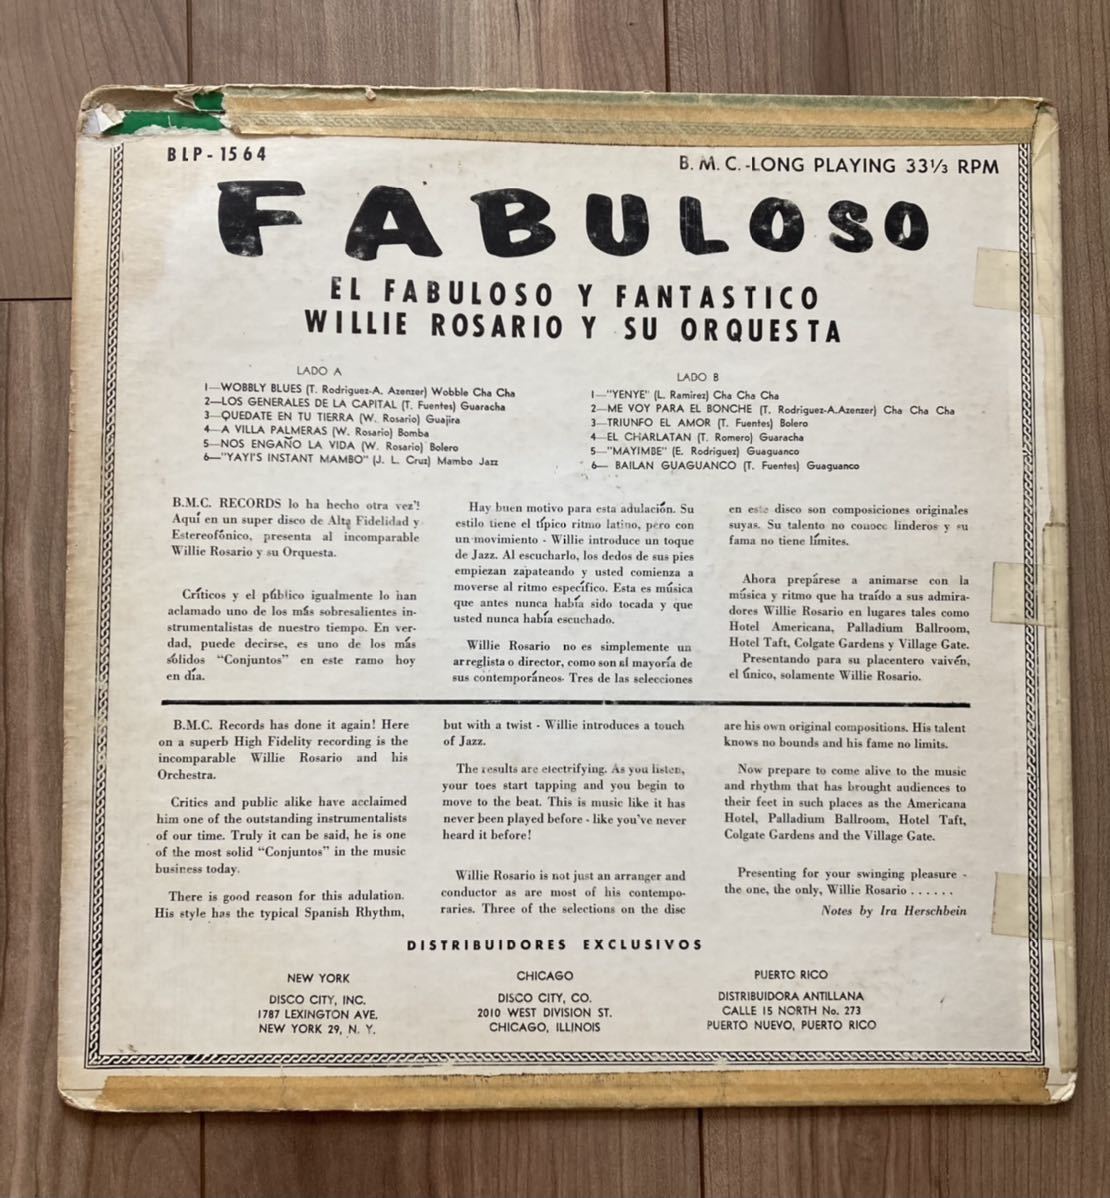  mega редкость запись #Willie Rosario Y Su Orquesta Fabuloso Fantastico оригинал US запись #.... сосна .. Хара mambo jazz